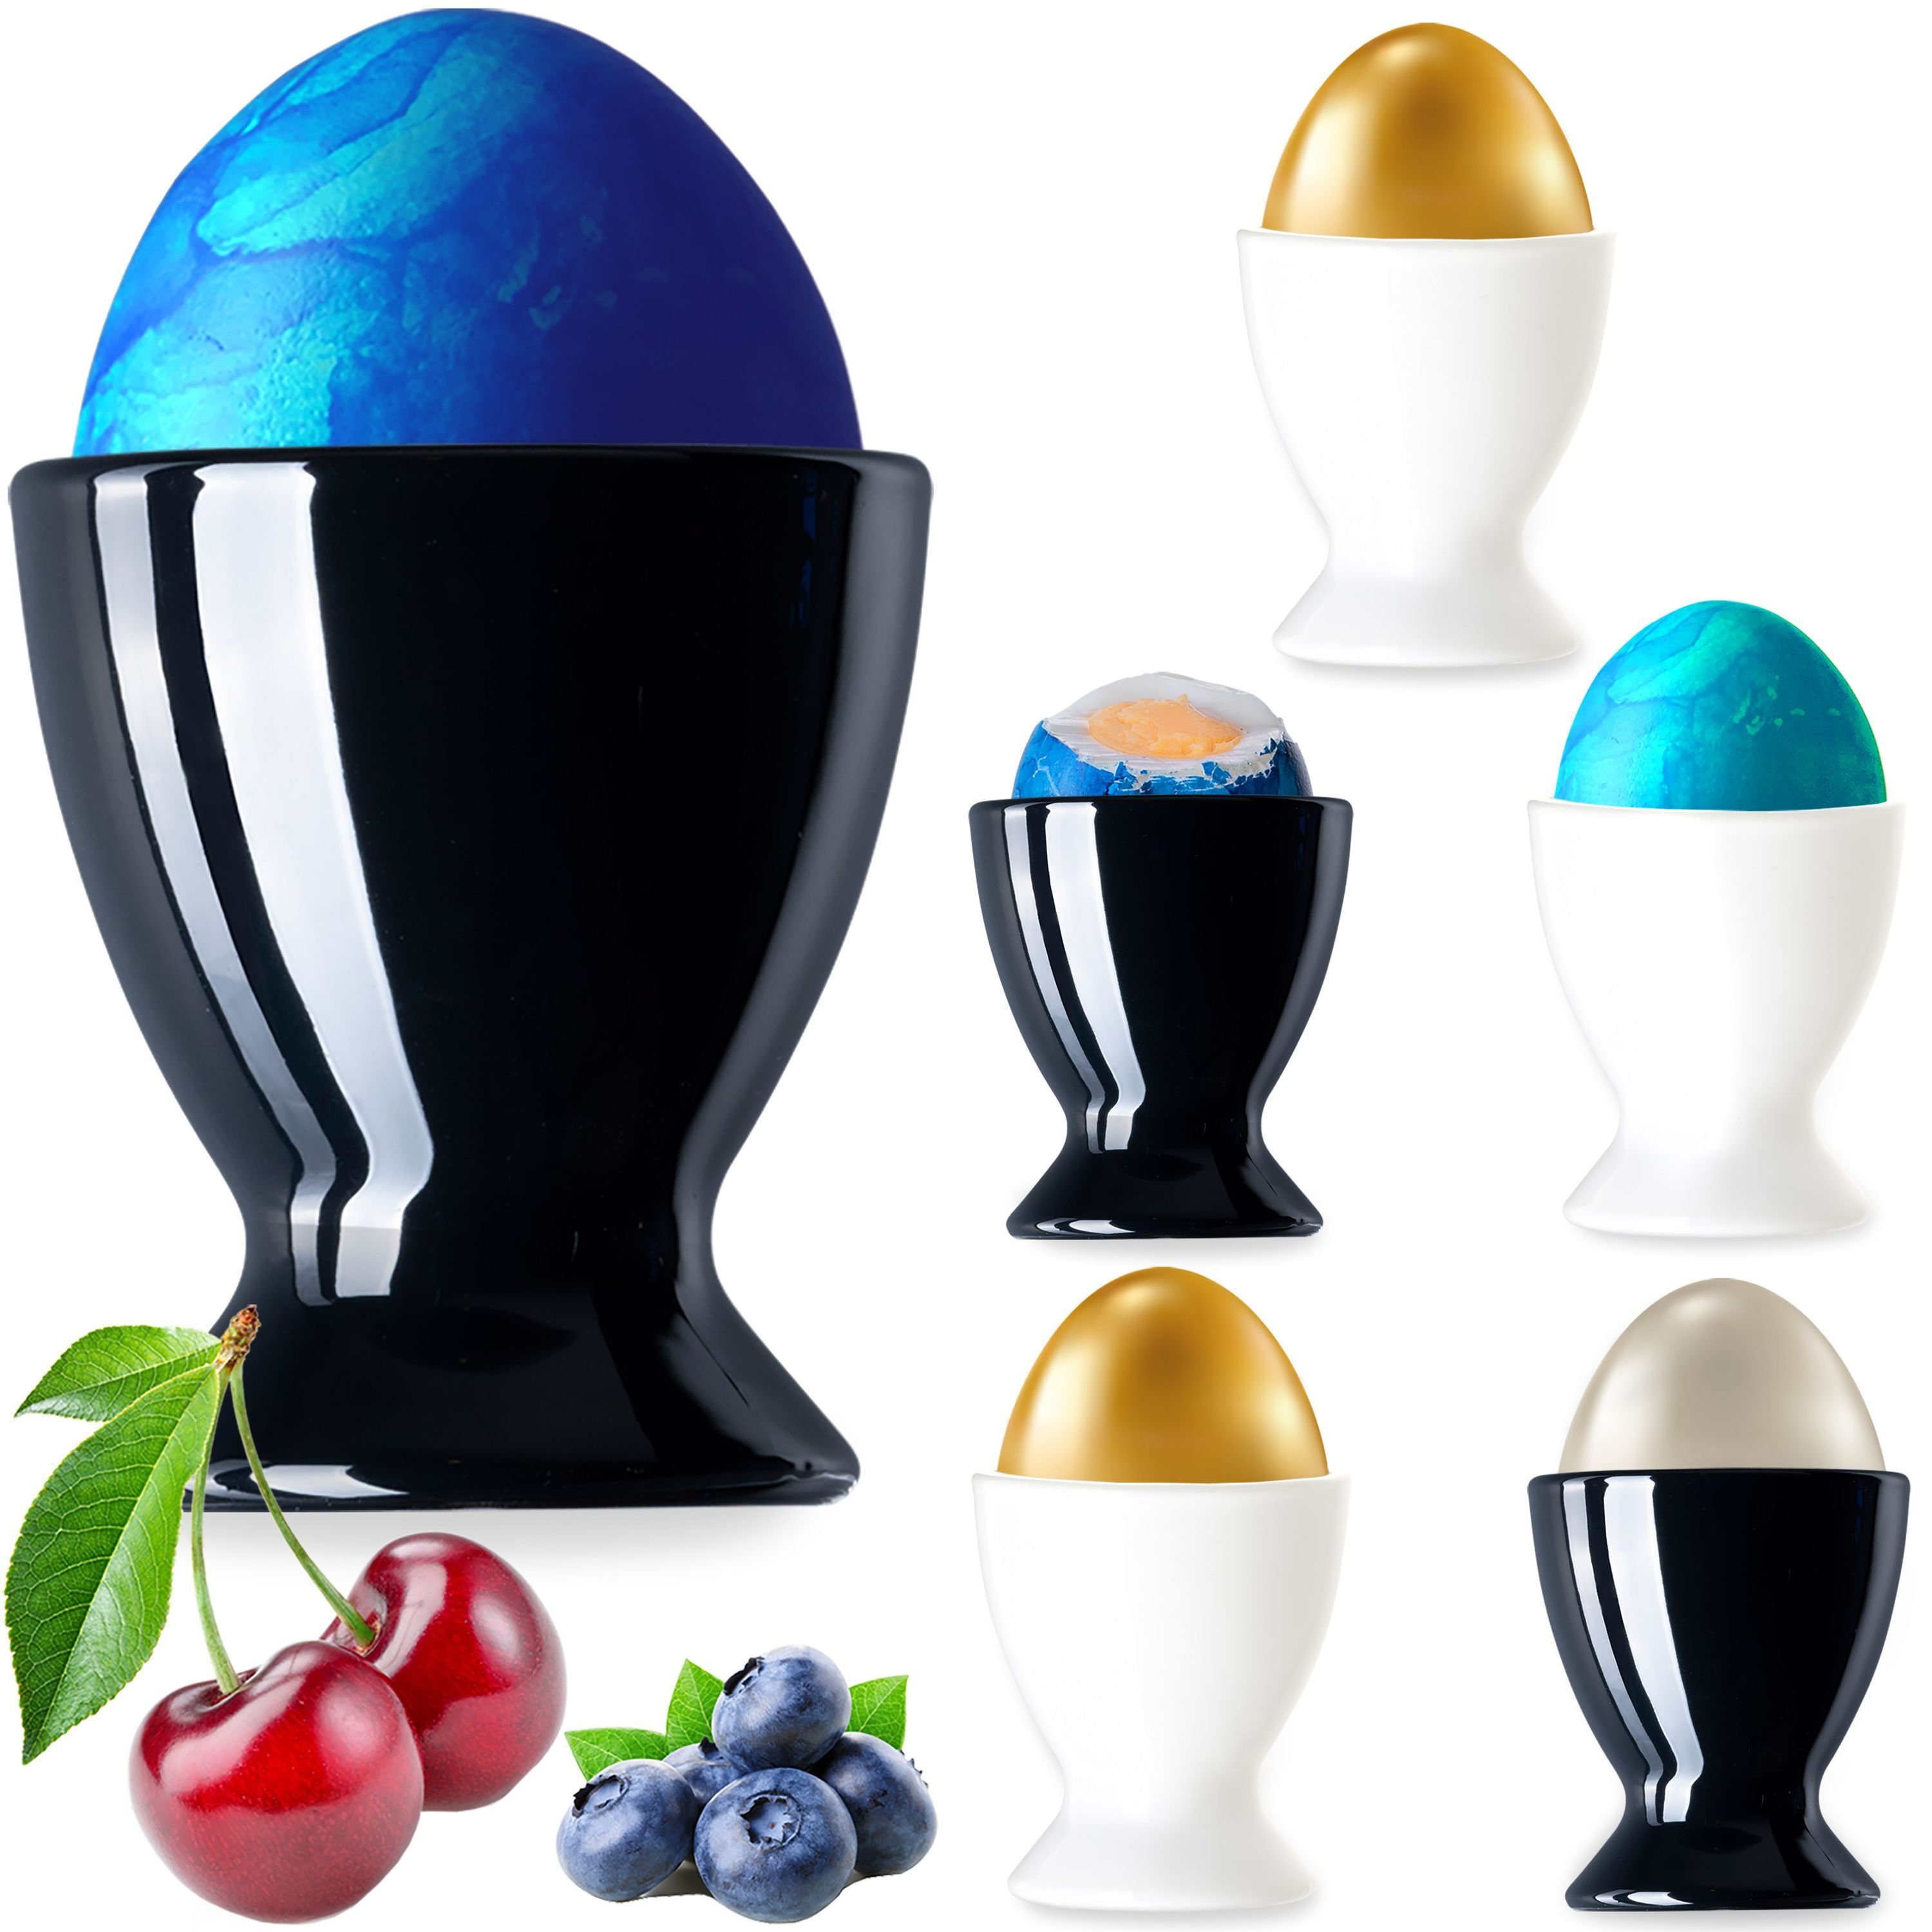 PLATINUX Eierbecher Schwarze Brunch & Eierständer Stück), Egg-Cup (6 Likörgläser Eierbecher, Eierhalter Weiße Frühstück